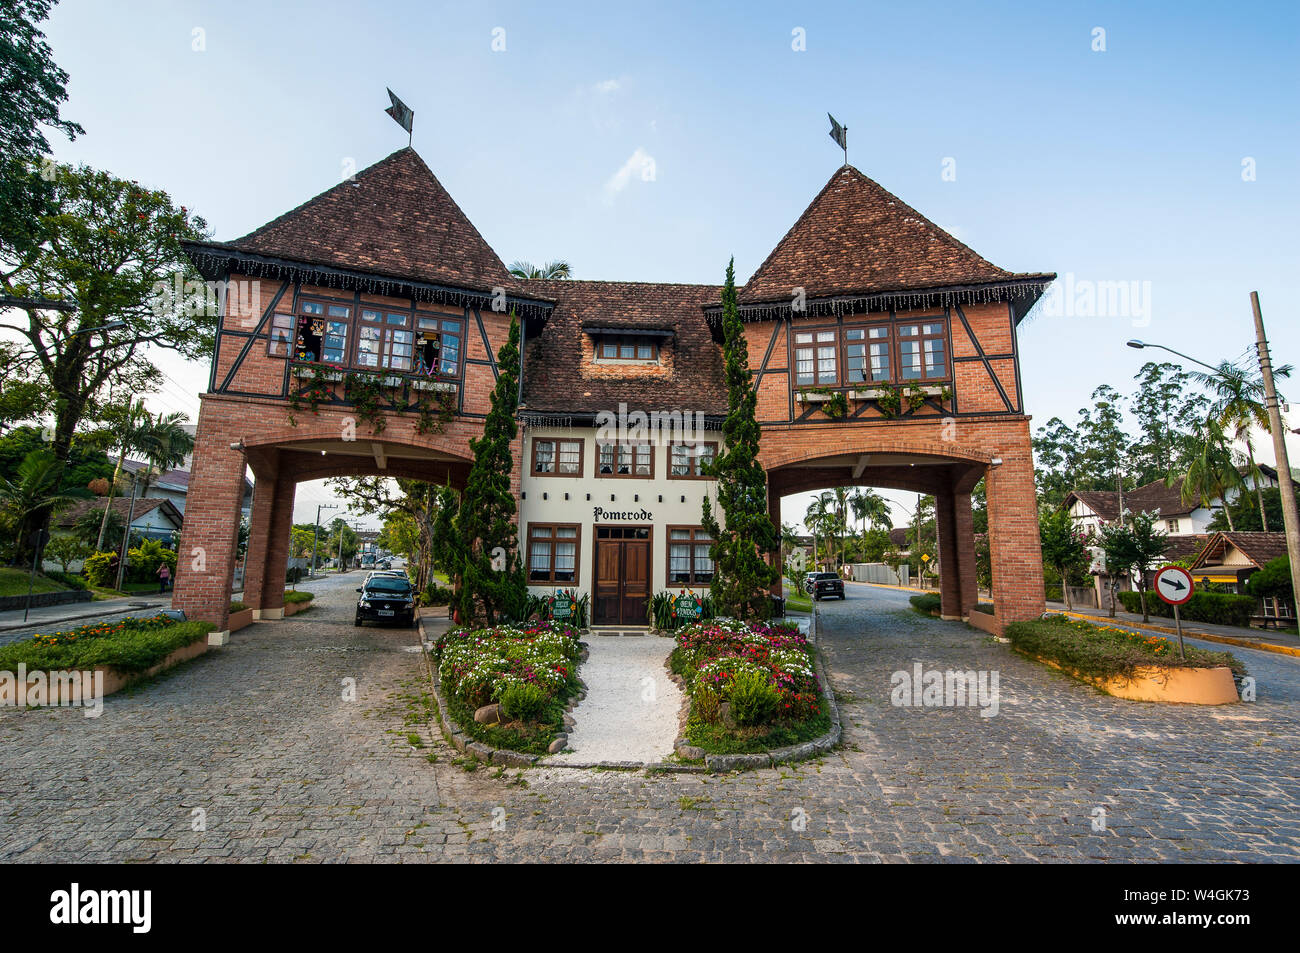 Town gate of the German town Pomerode, Brazil Stock Photo